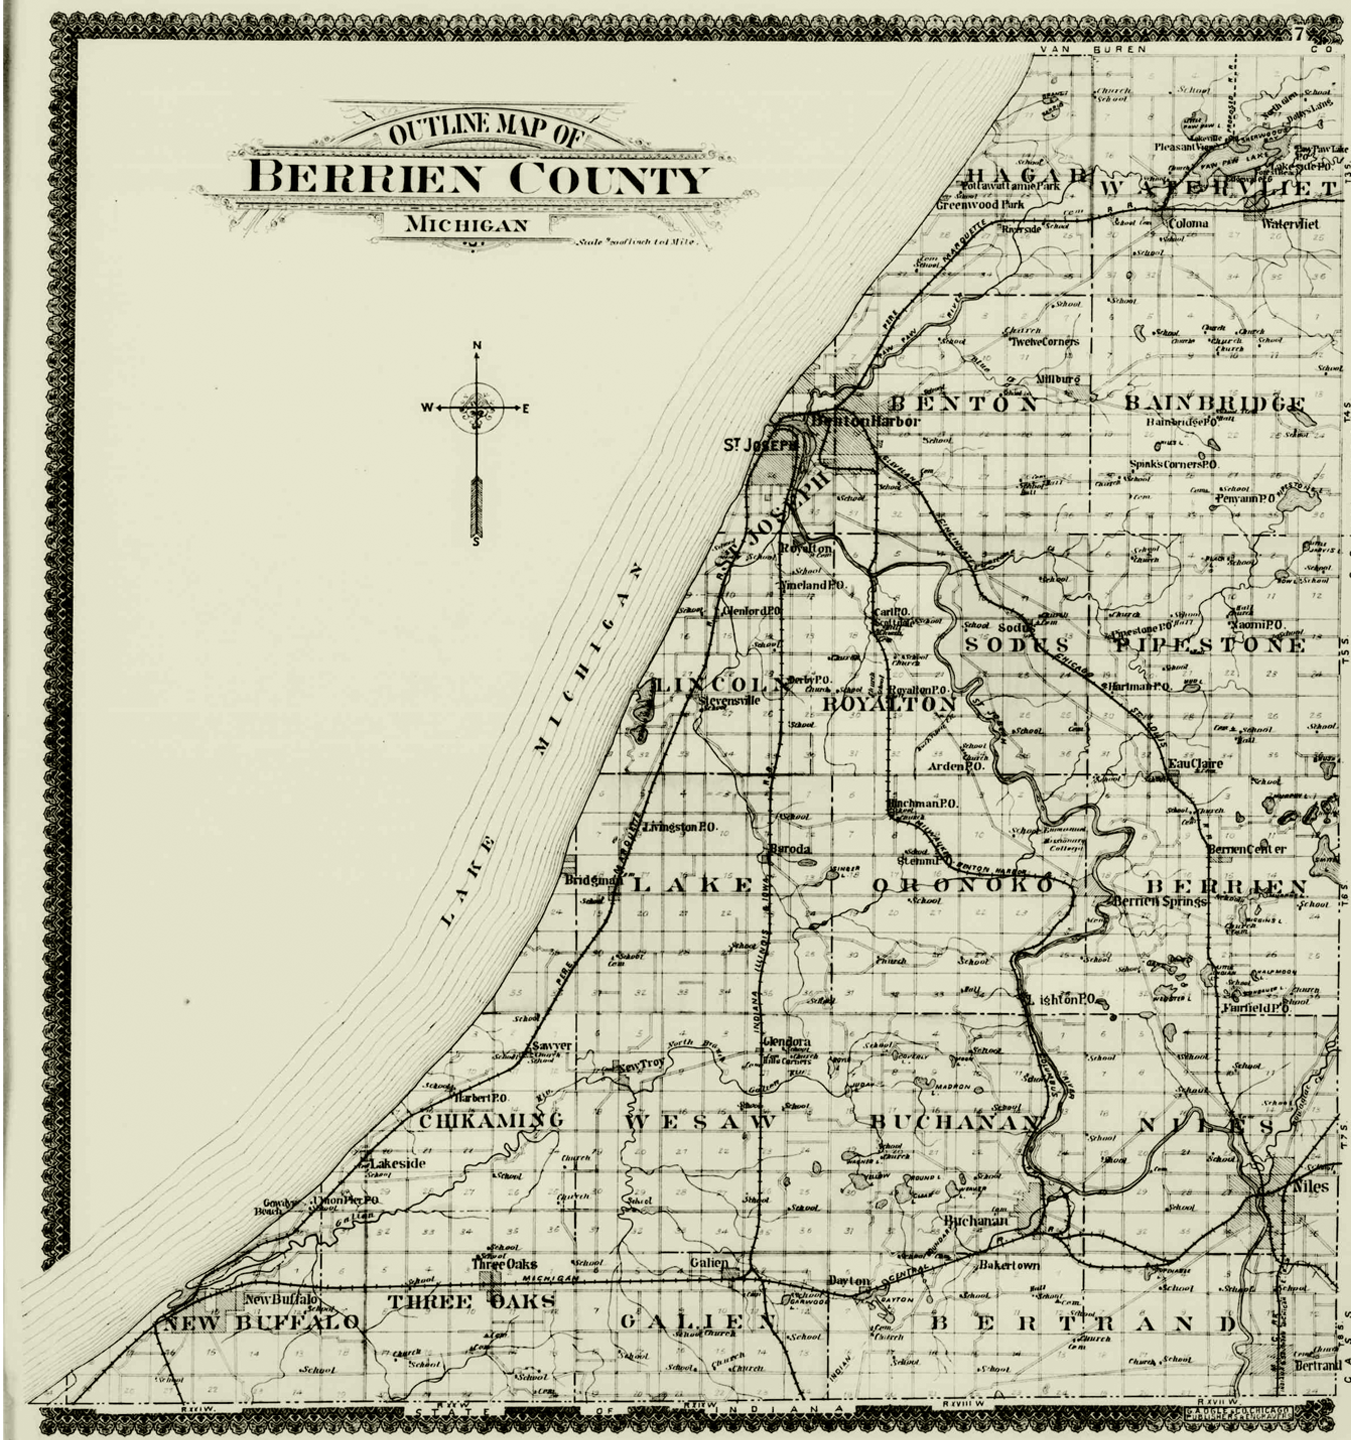 1903 Berrien County Michigan landownership map